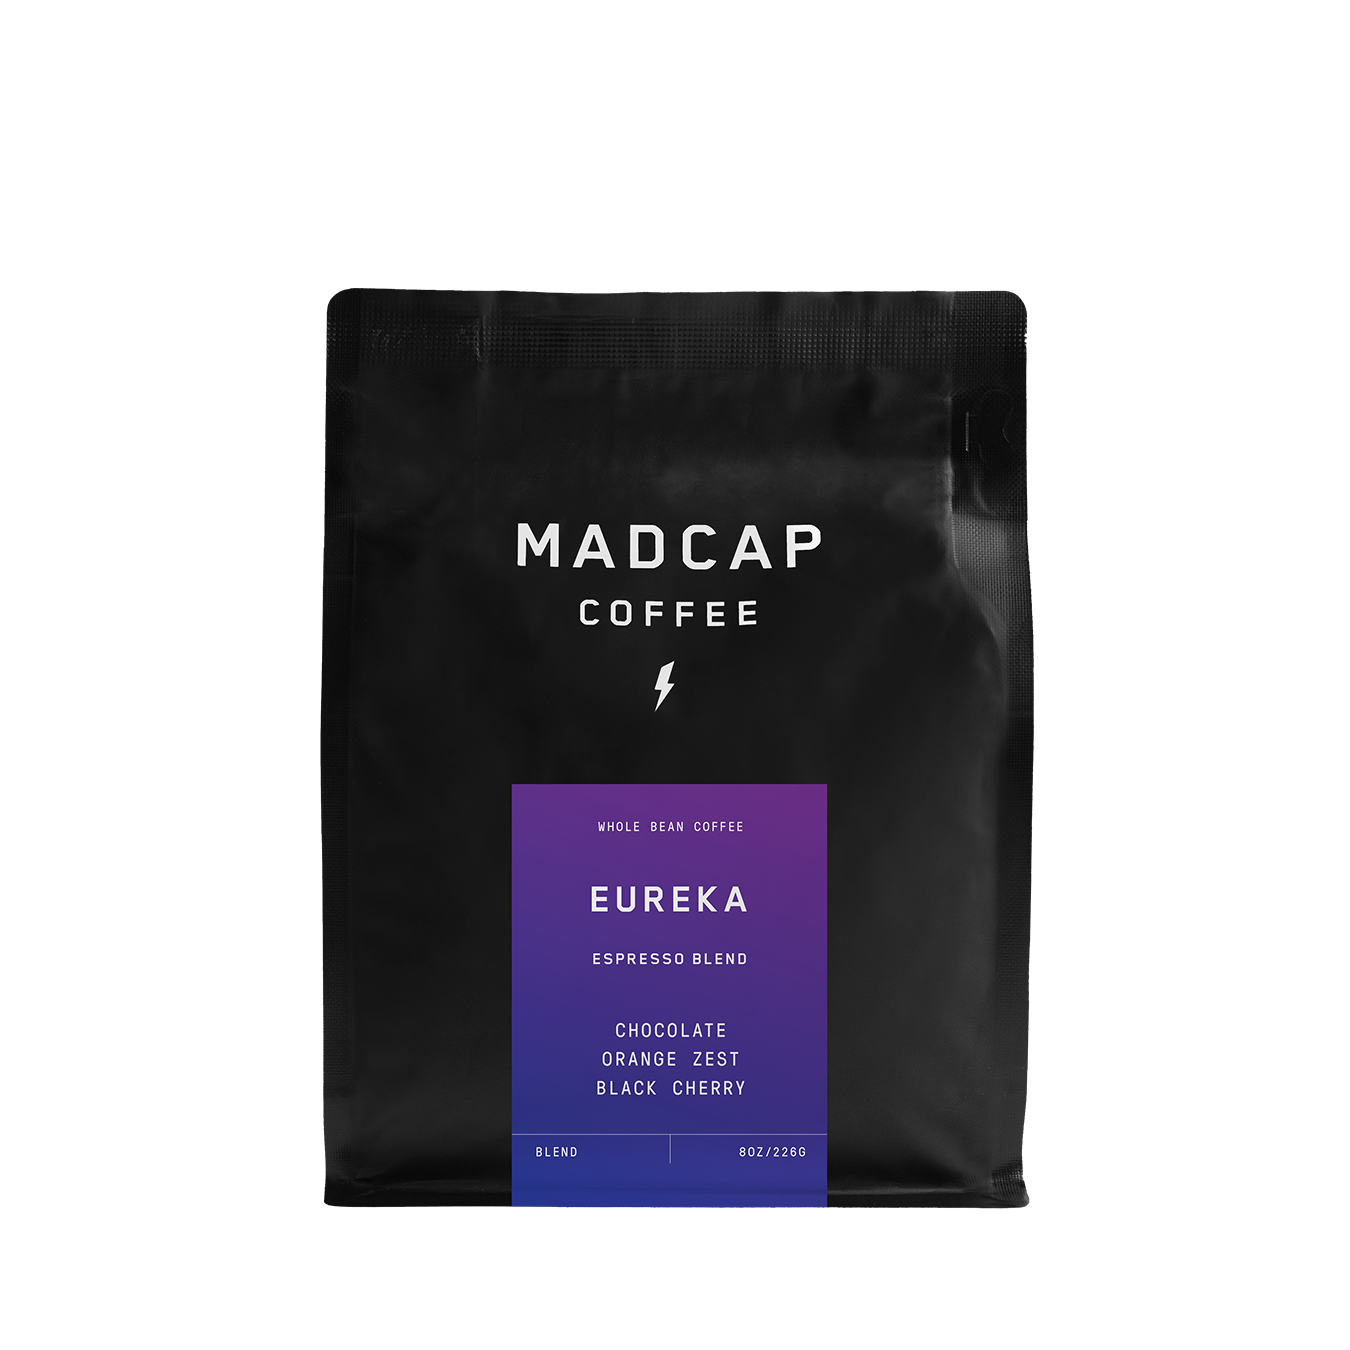 Eureka espresso coffee blend